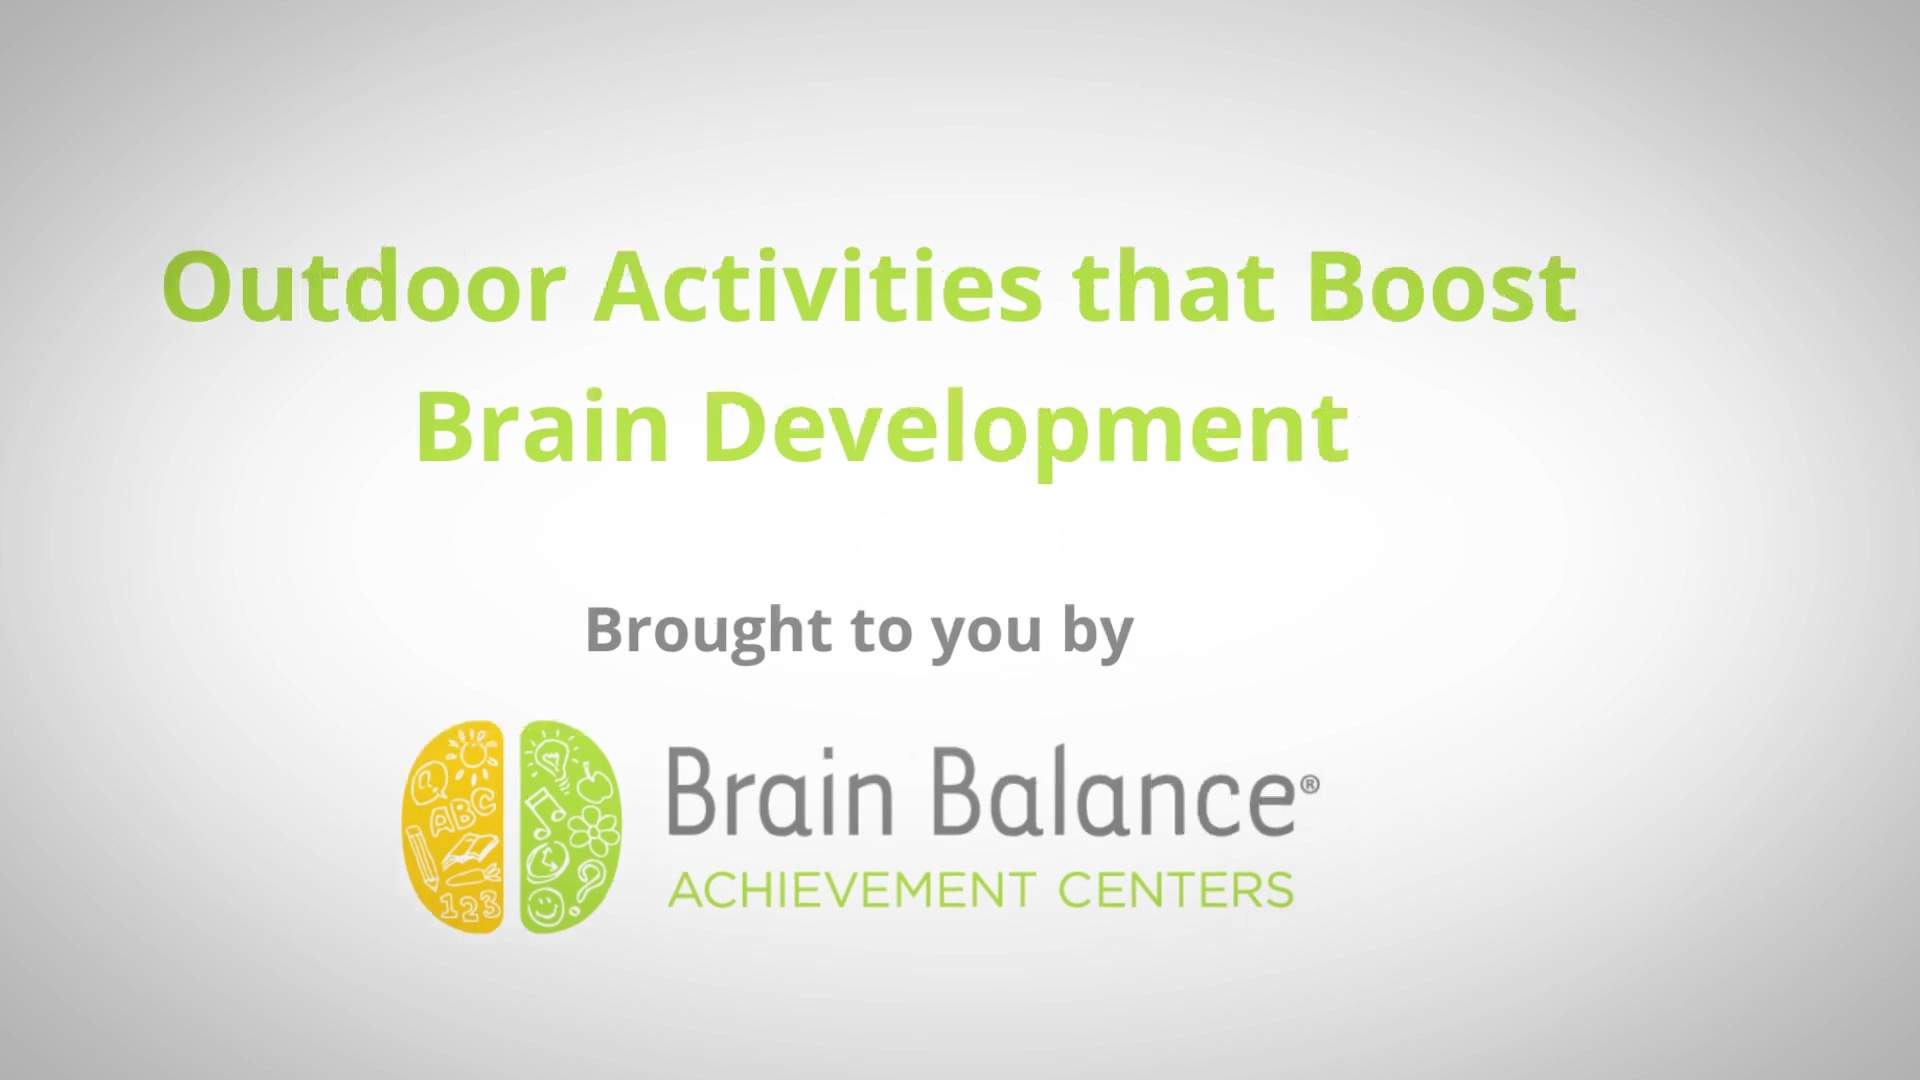 Brain Balance Achievement Centers — Outdoor activities